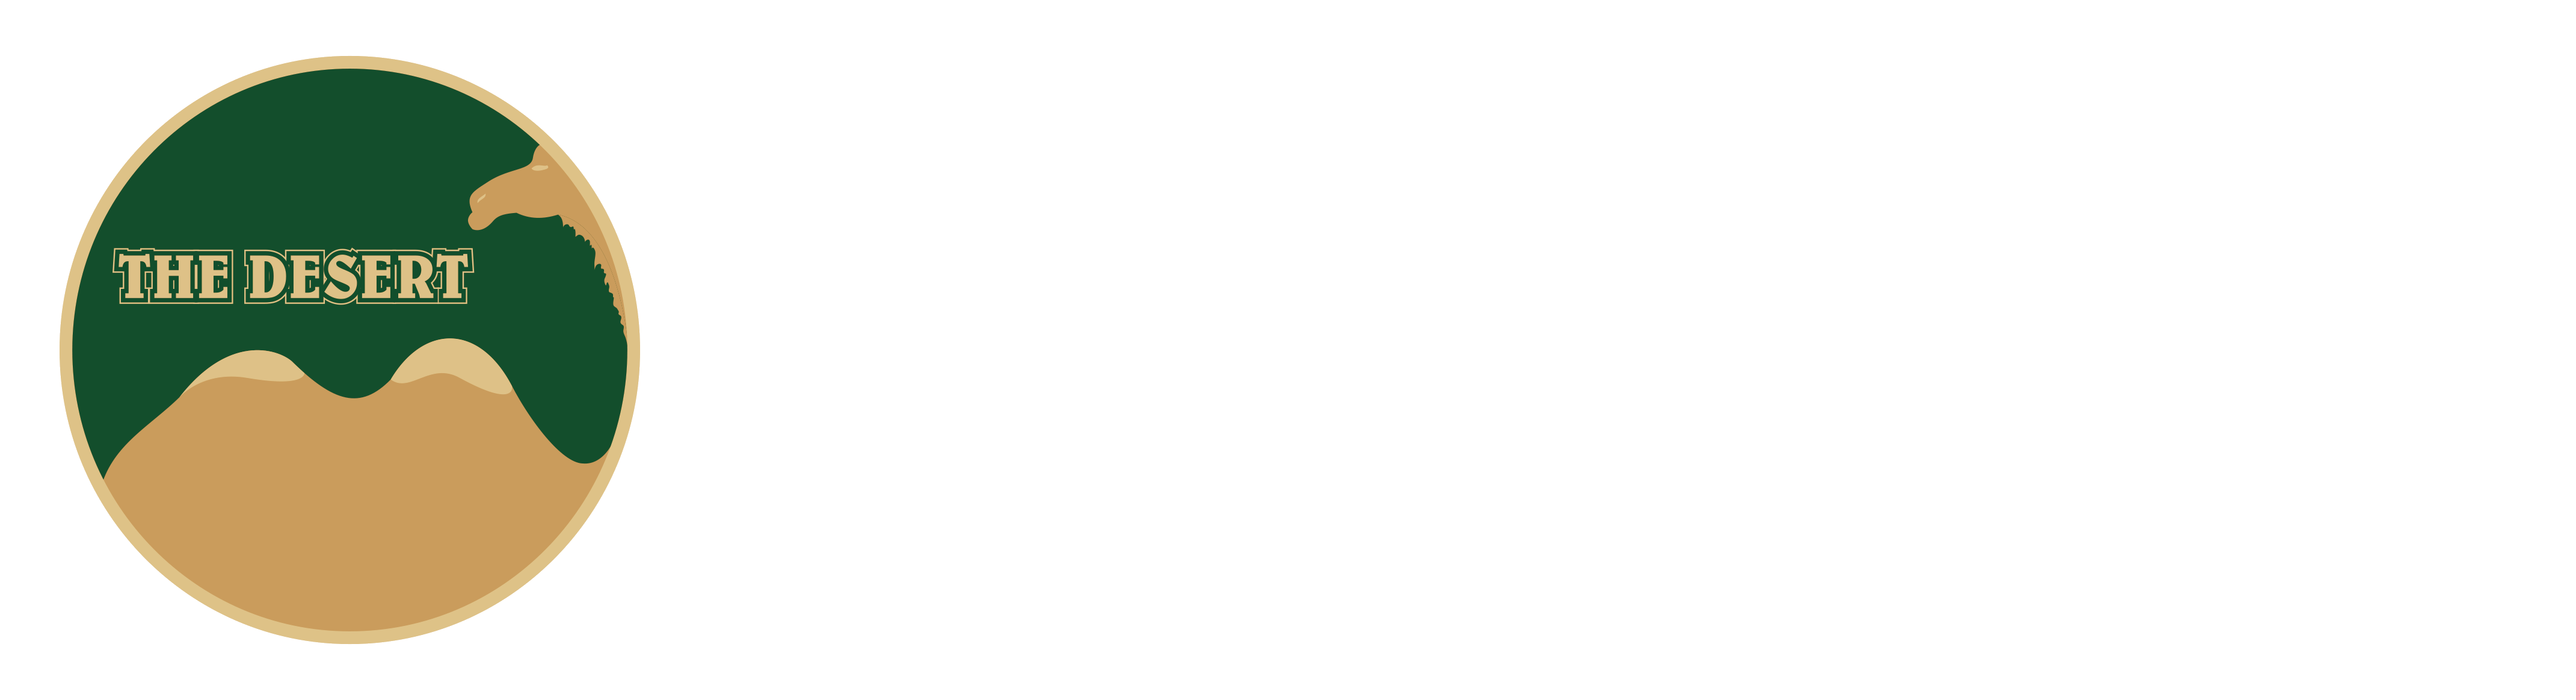 The Yulin Desert Golf Course